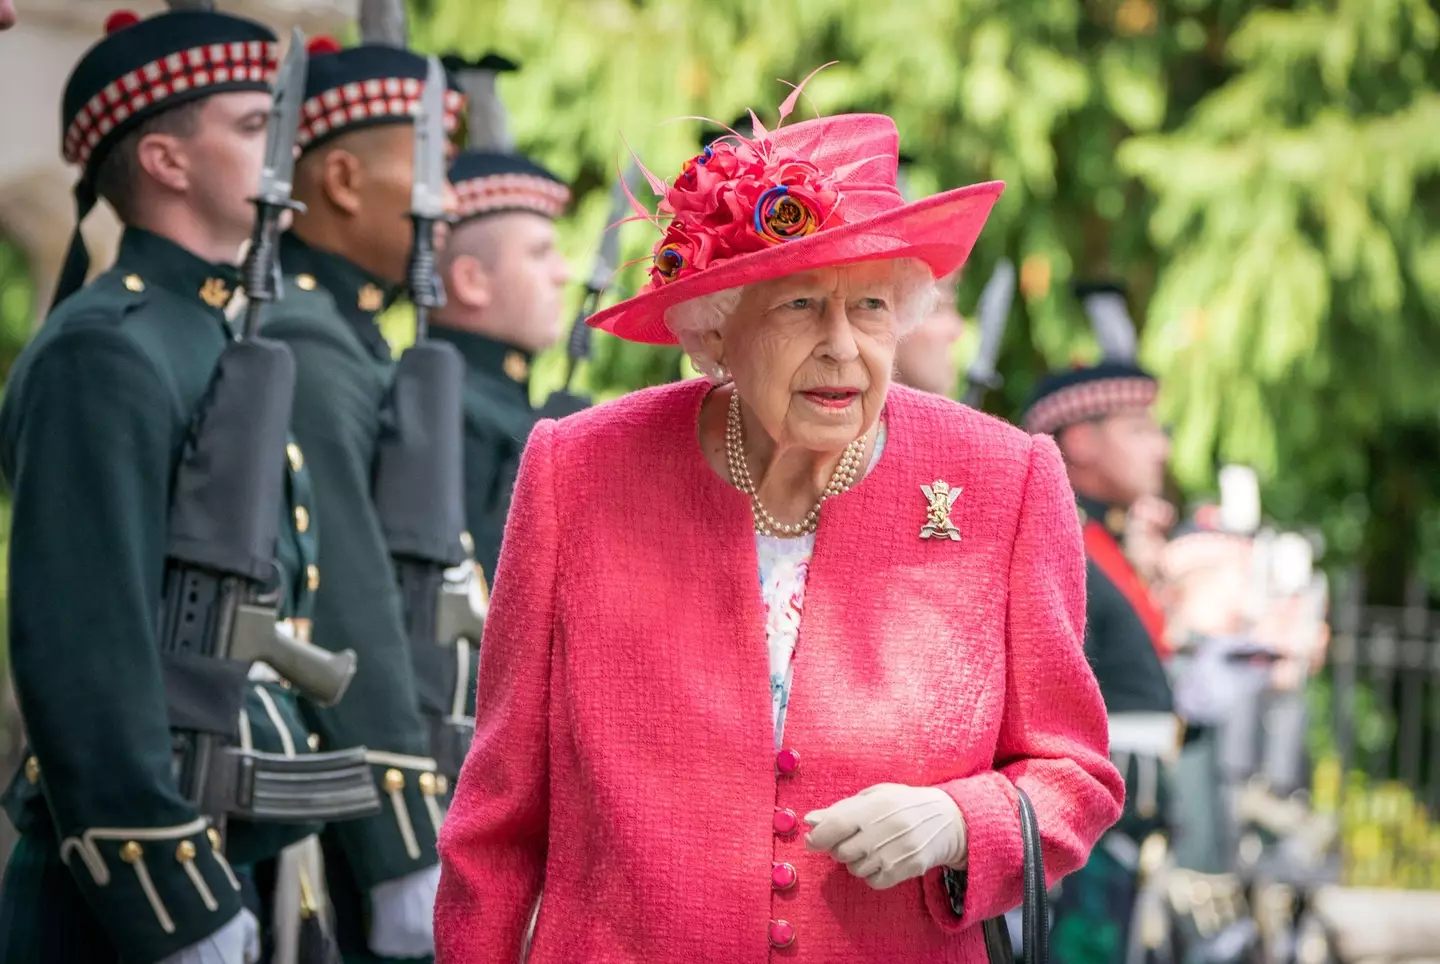 Queen Elizabeth awarded Hamilton an MBE in 2009. (Image